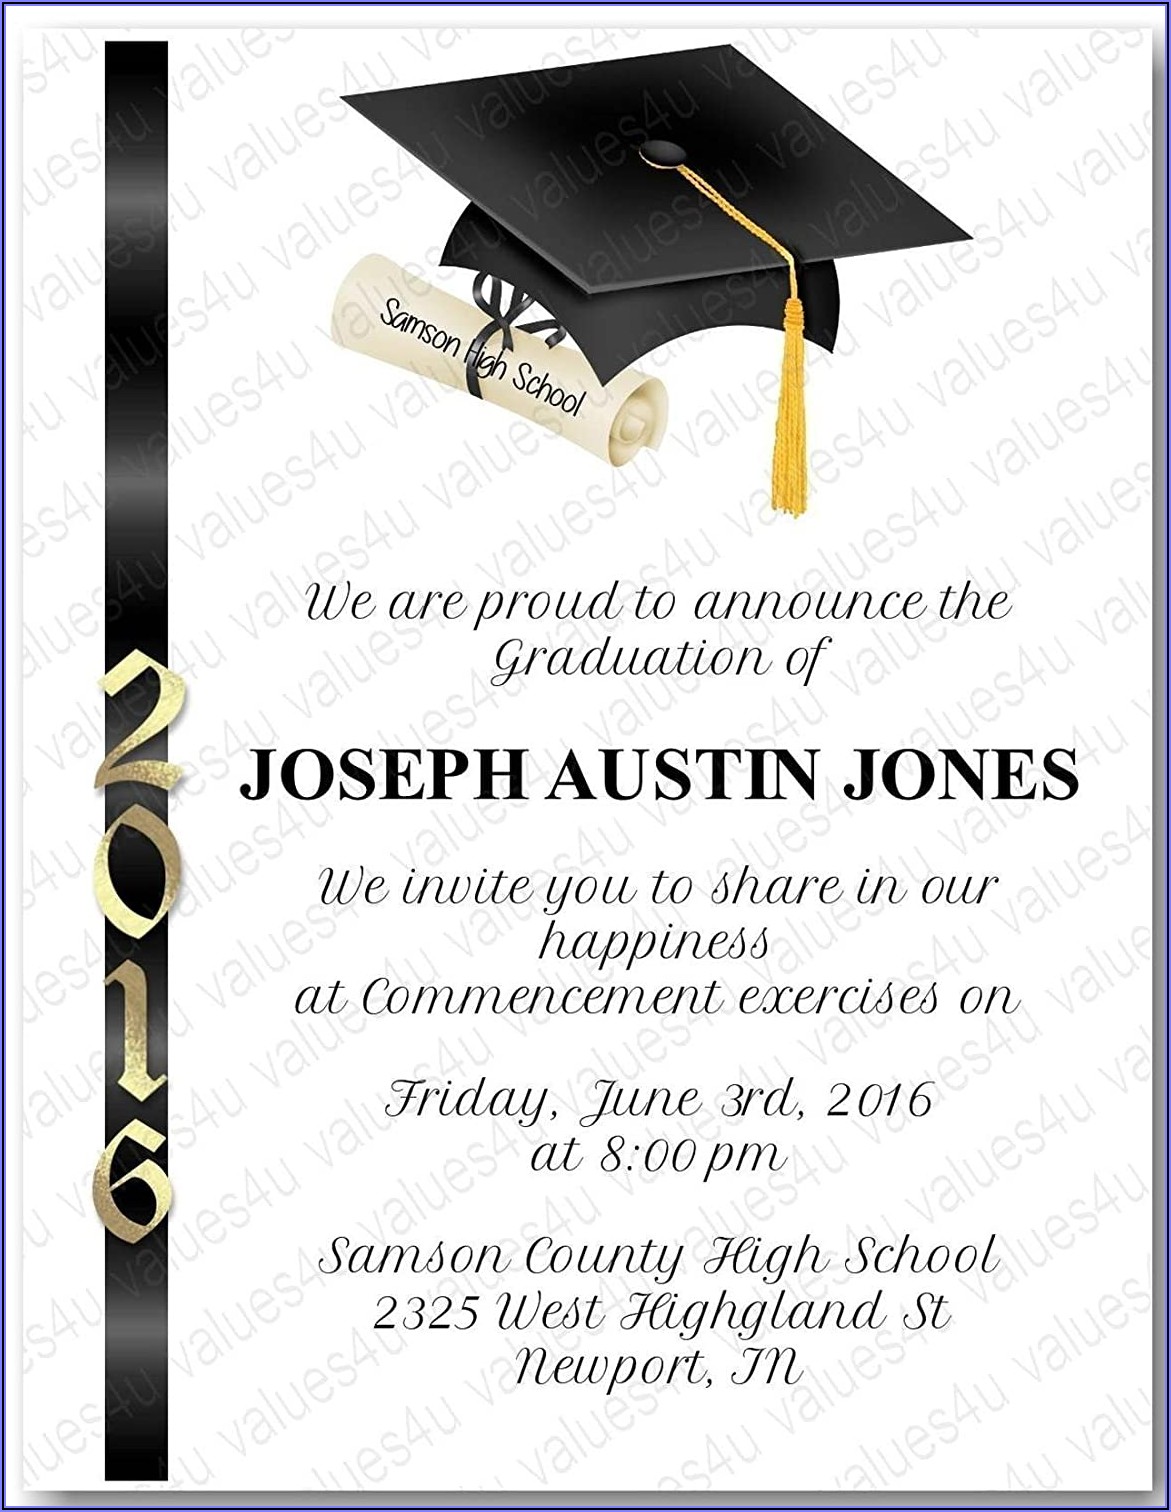 Print Graduation Announcements At Walmart